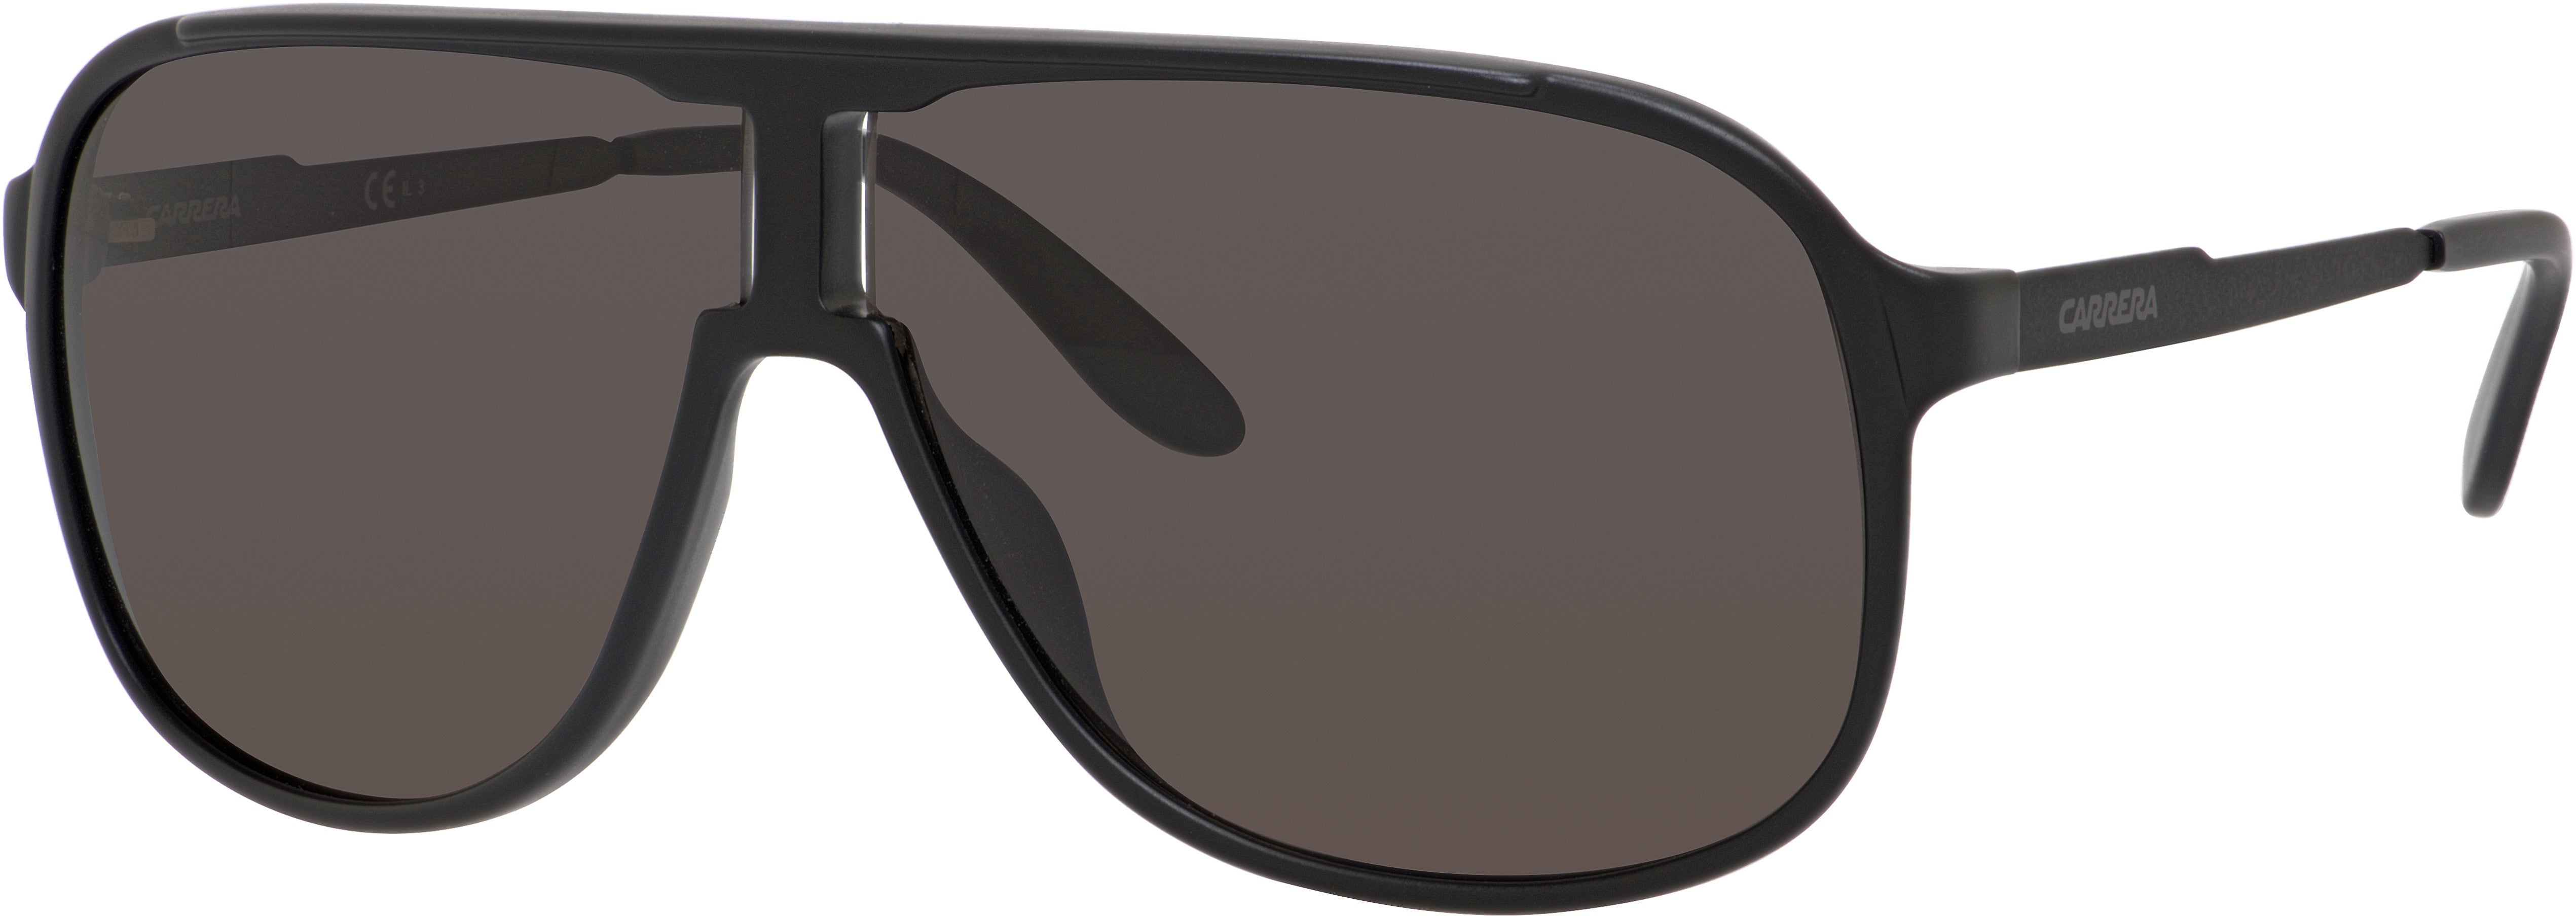 Carrera New Safari Aviator Sunglasses 0GTN-0GTN  Matte Black / Shiny Black (NR Brown Gray)